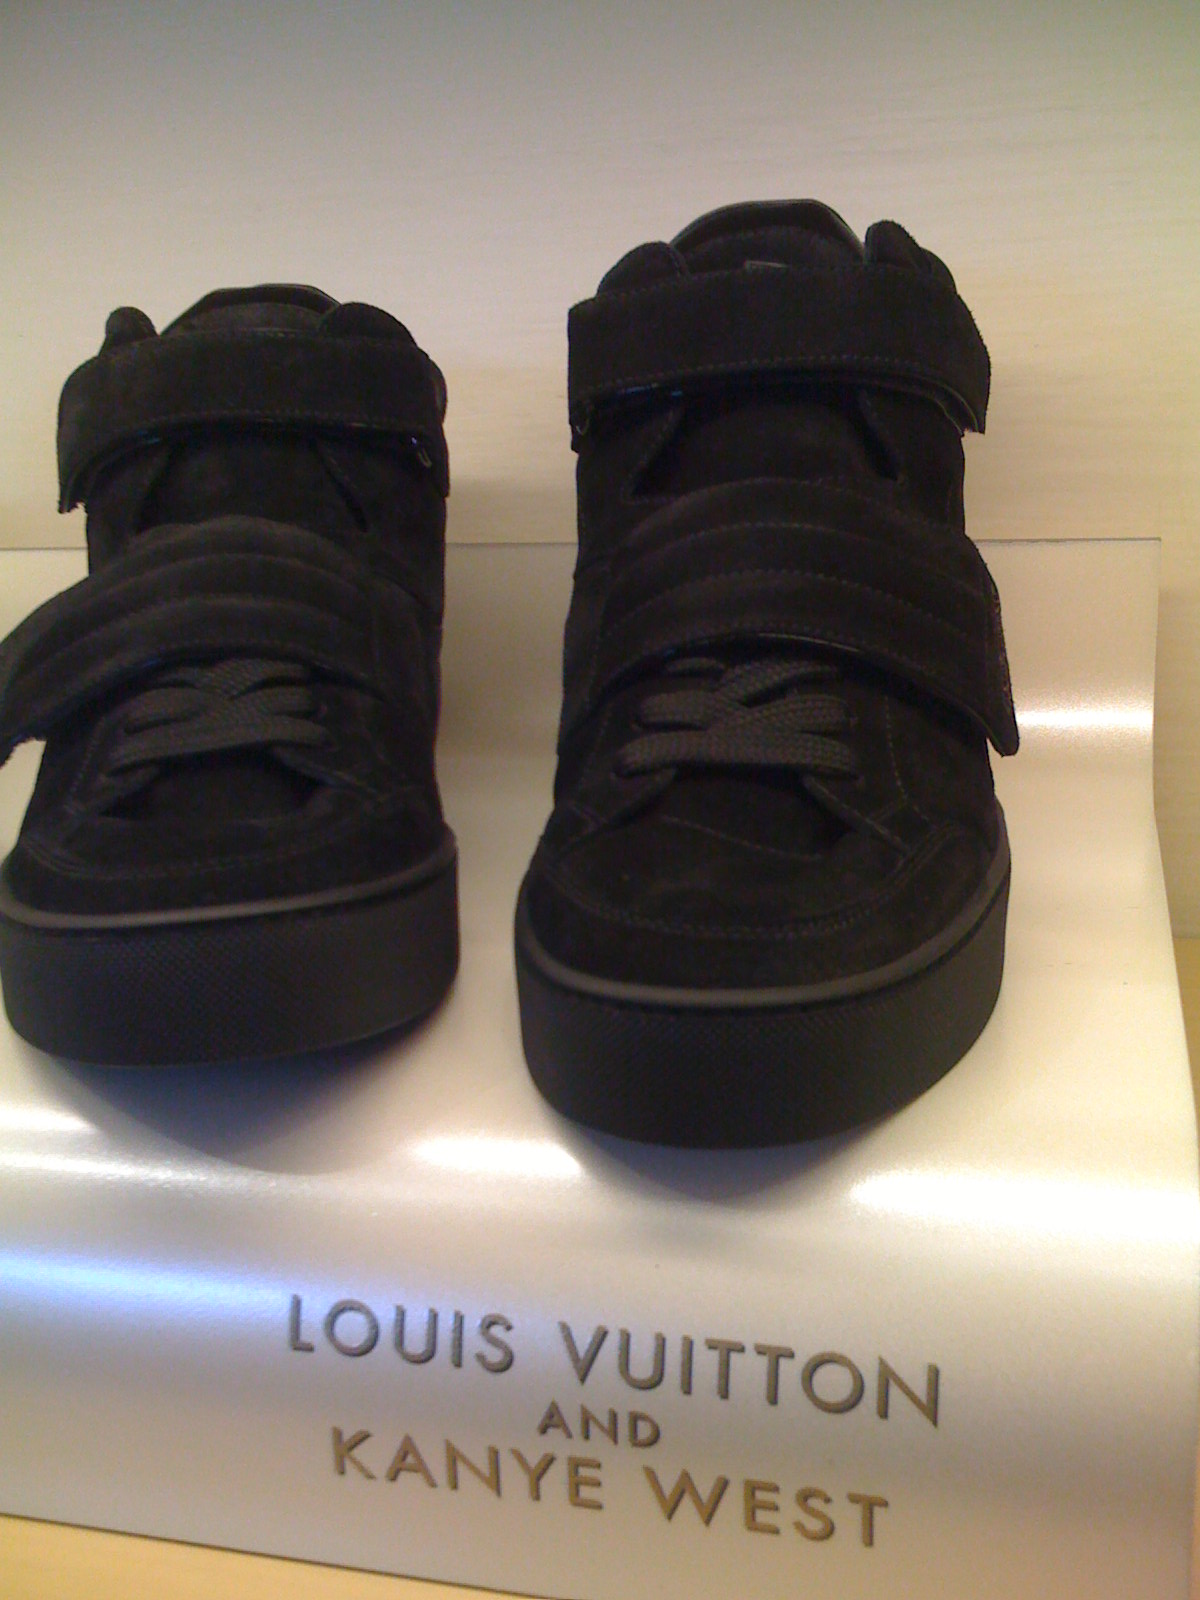 Kanye West x Louis Vuitton - Don's & Jasper's Preview 